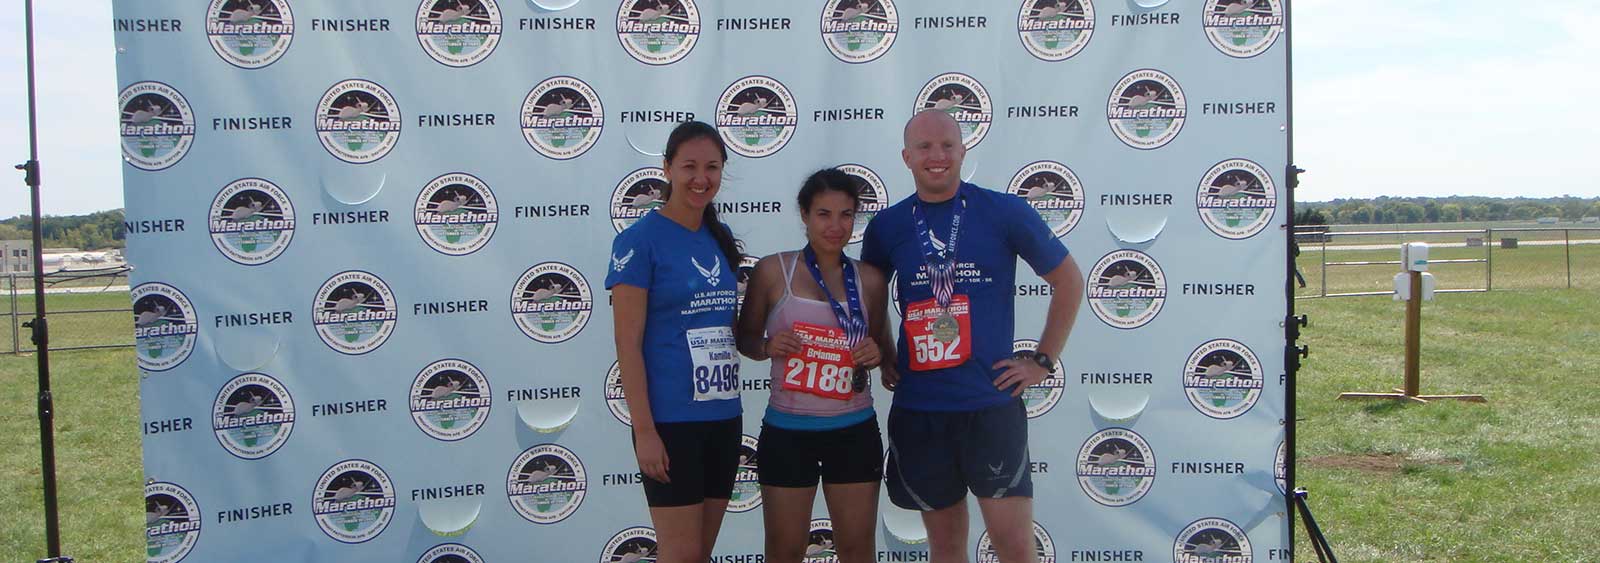 finish at the air force marathon